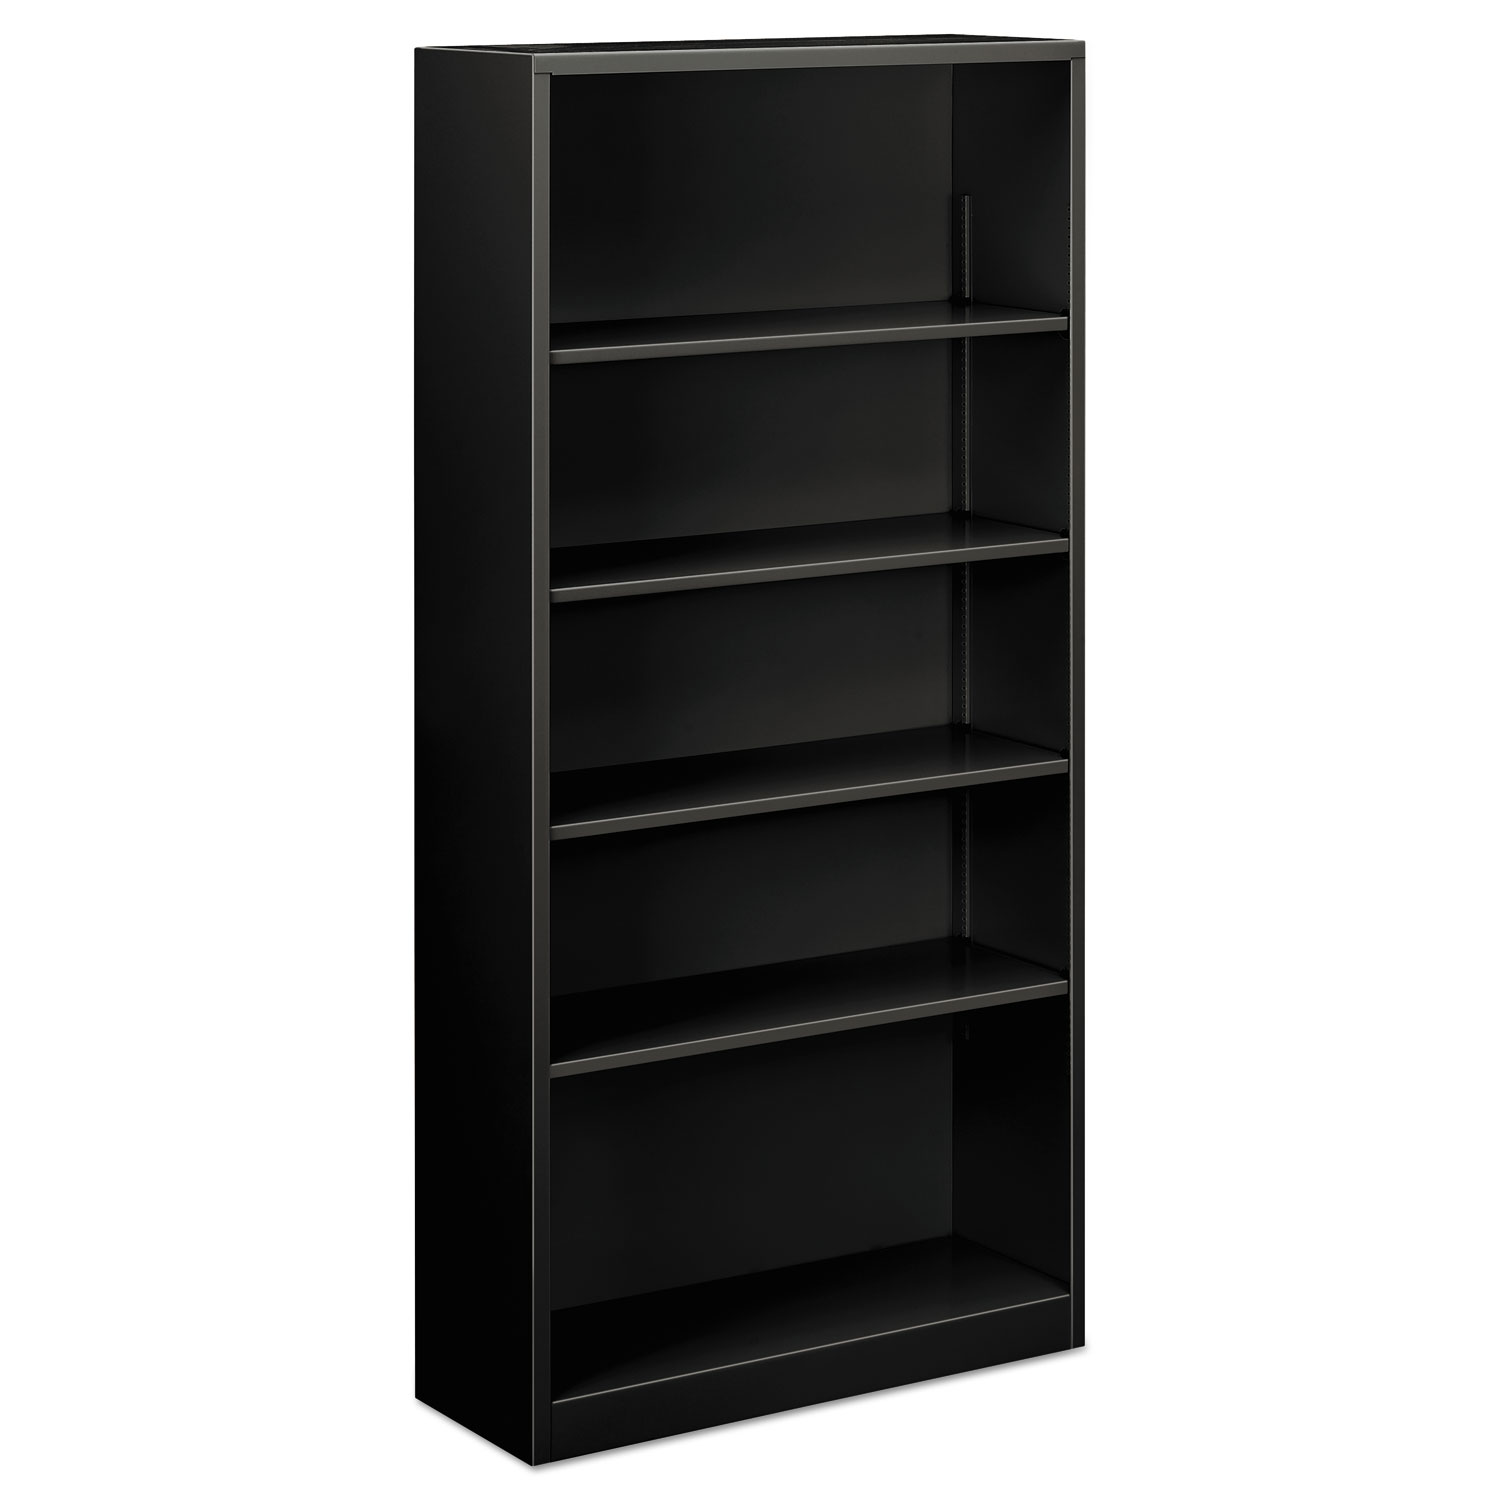  Alera ALEBCM57135BL Steel Bookcase, 5-Shelf, 34.5w x 12.63d x 71h, Black (ALEBCM57135BL) 